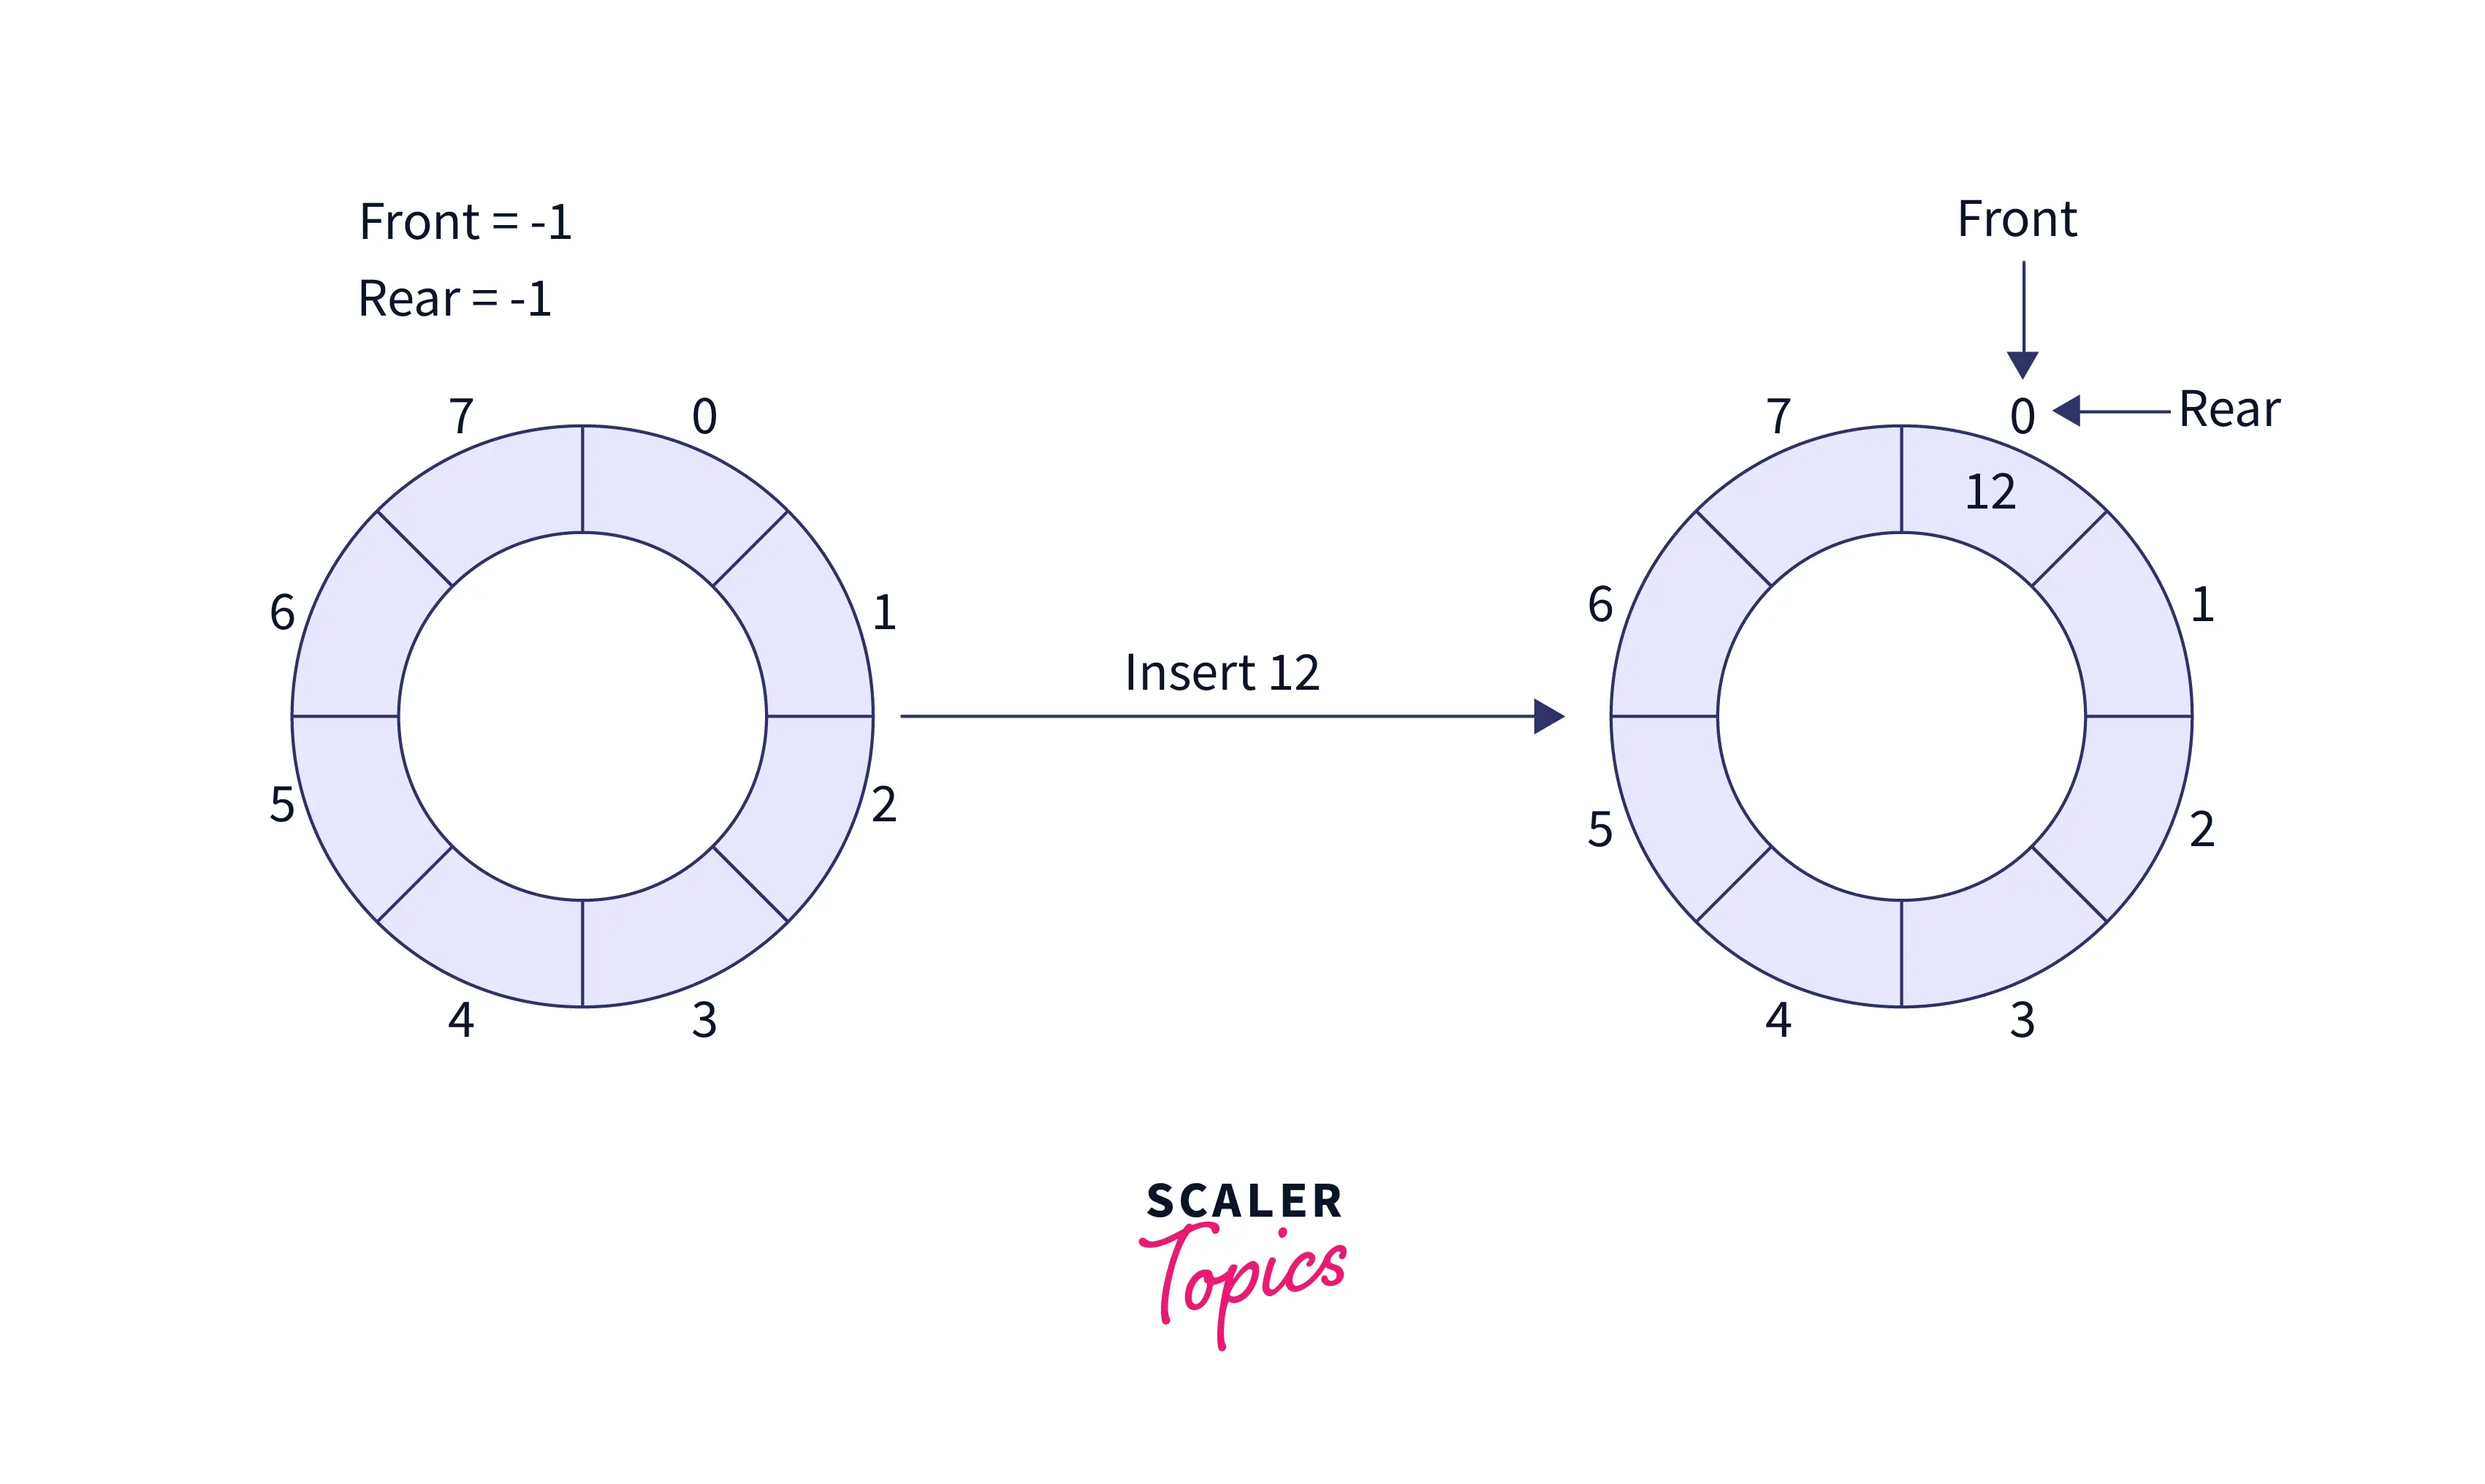 insertion-on-empty-circular-queue